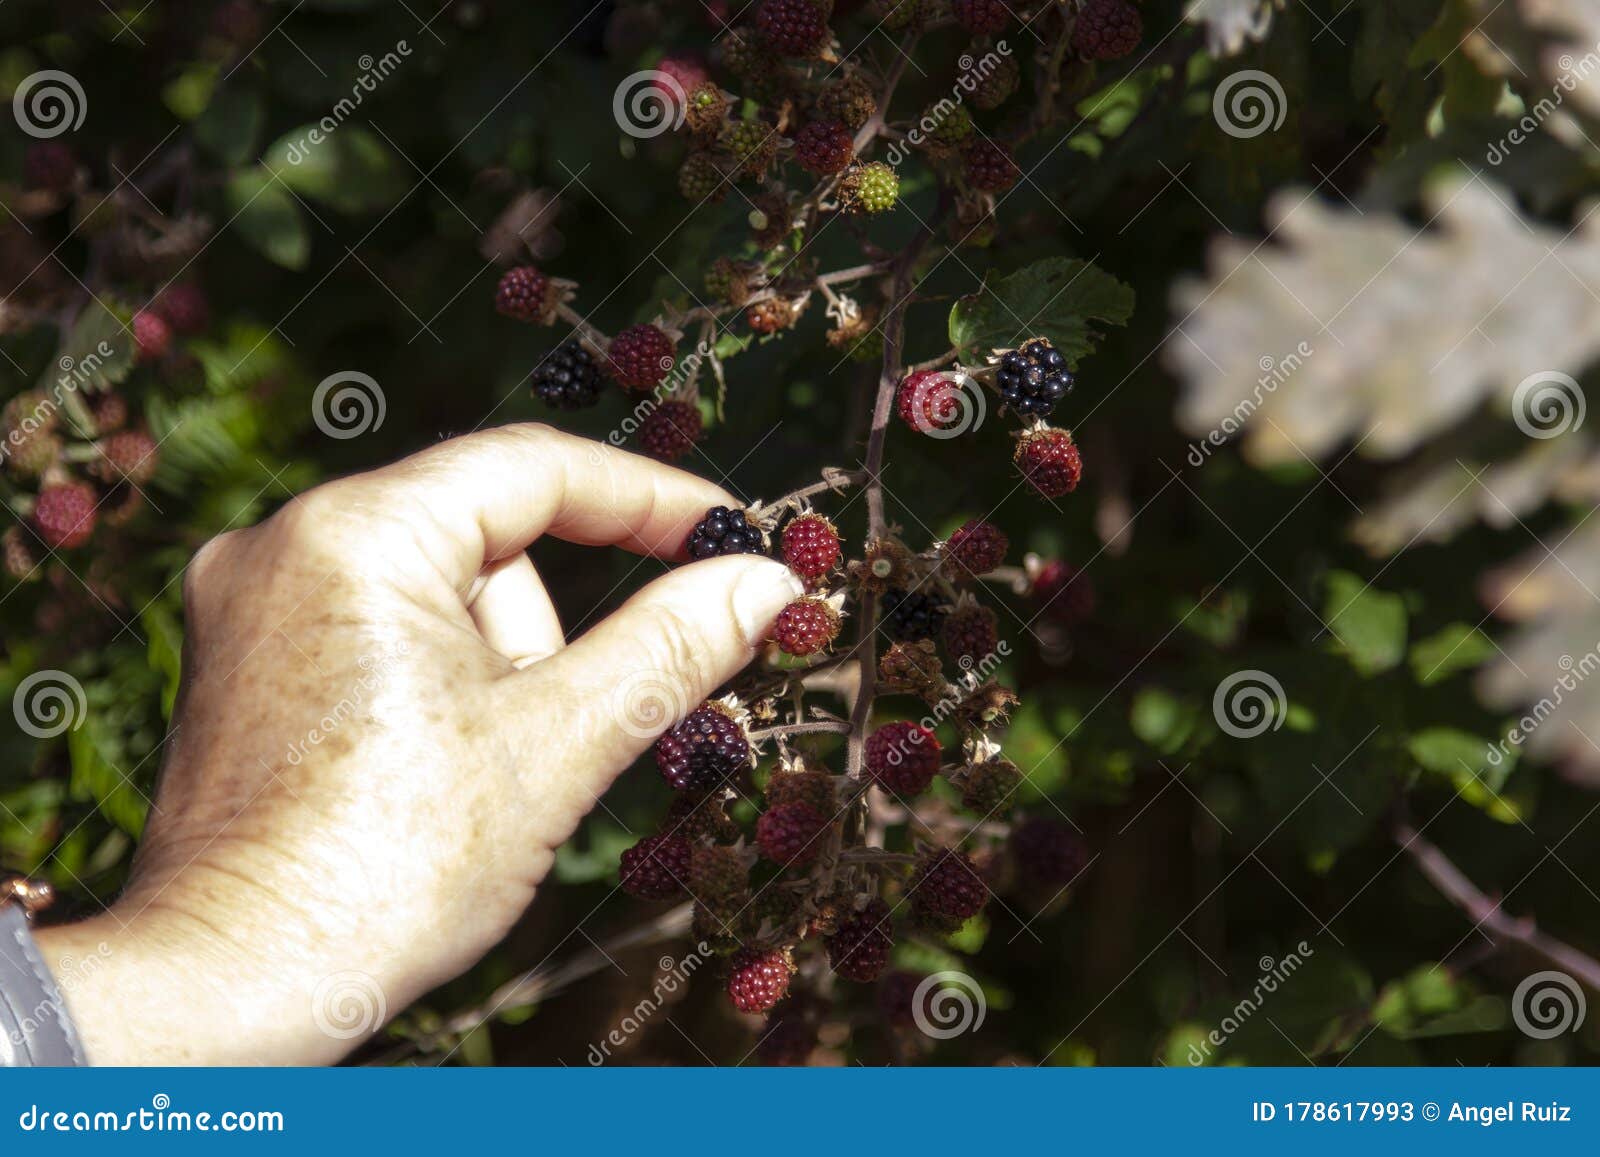 woman`s hand picking wild blackberries.